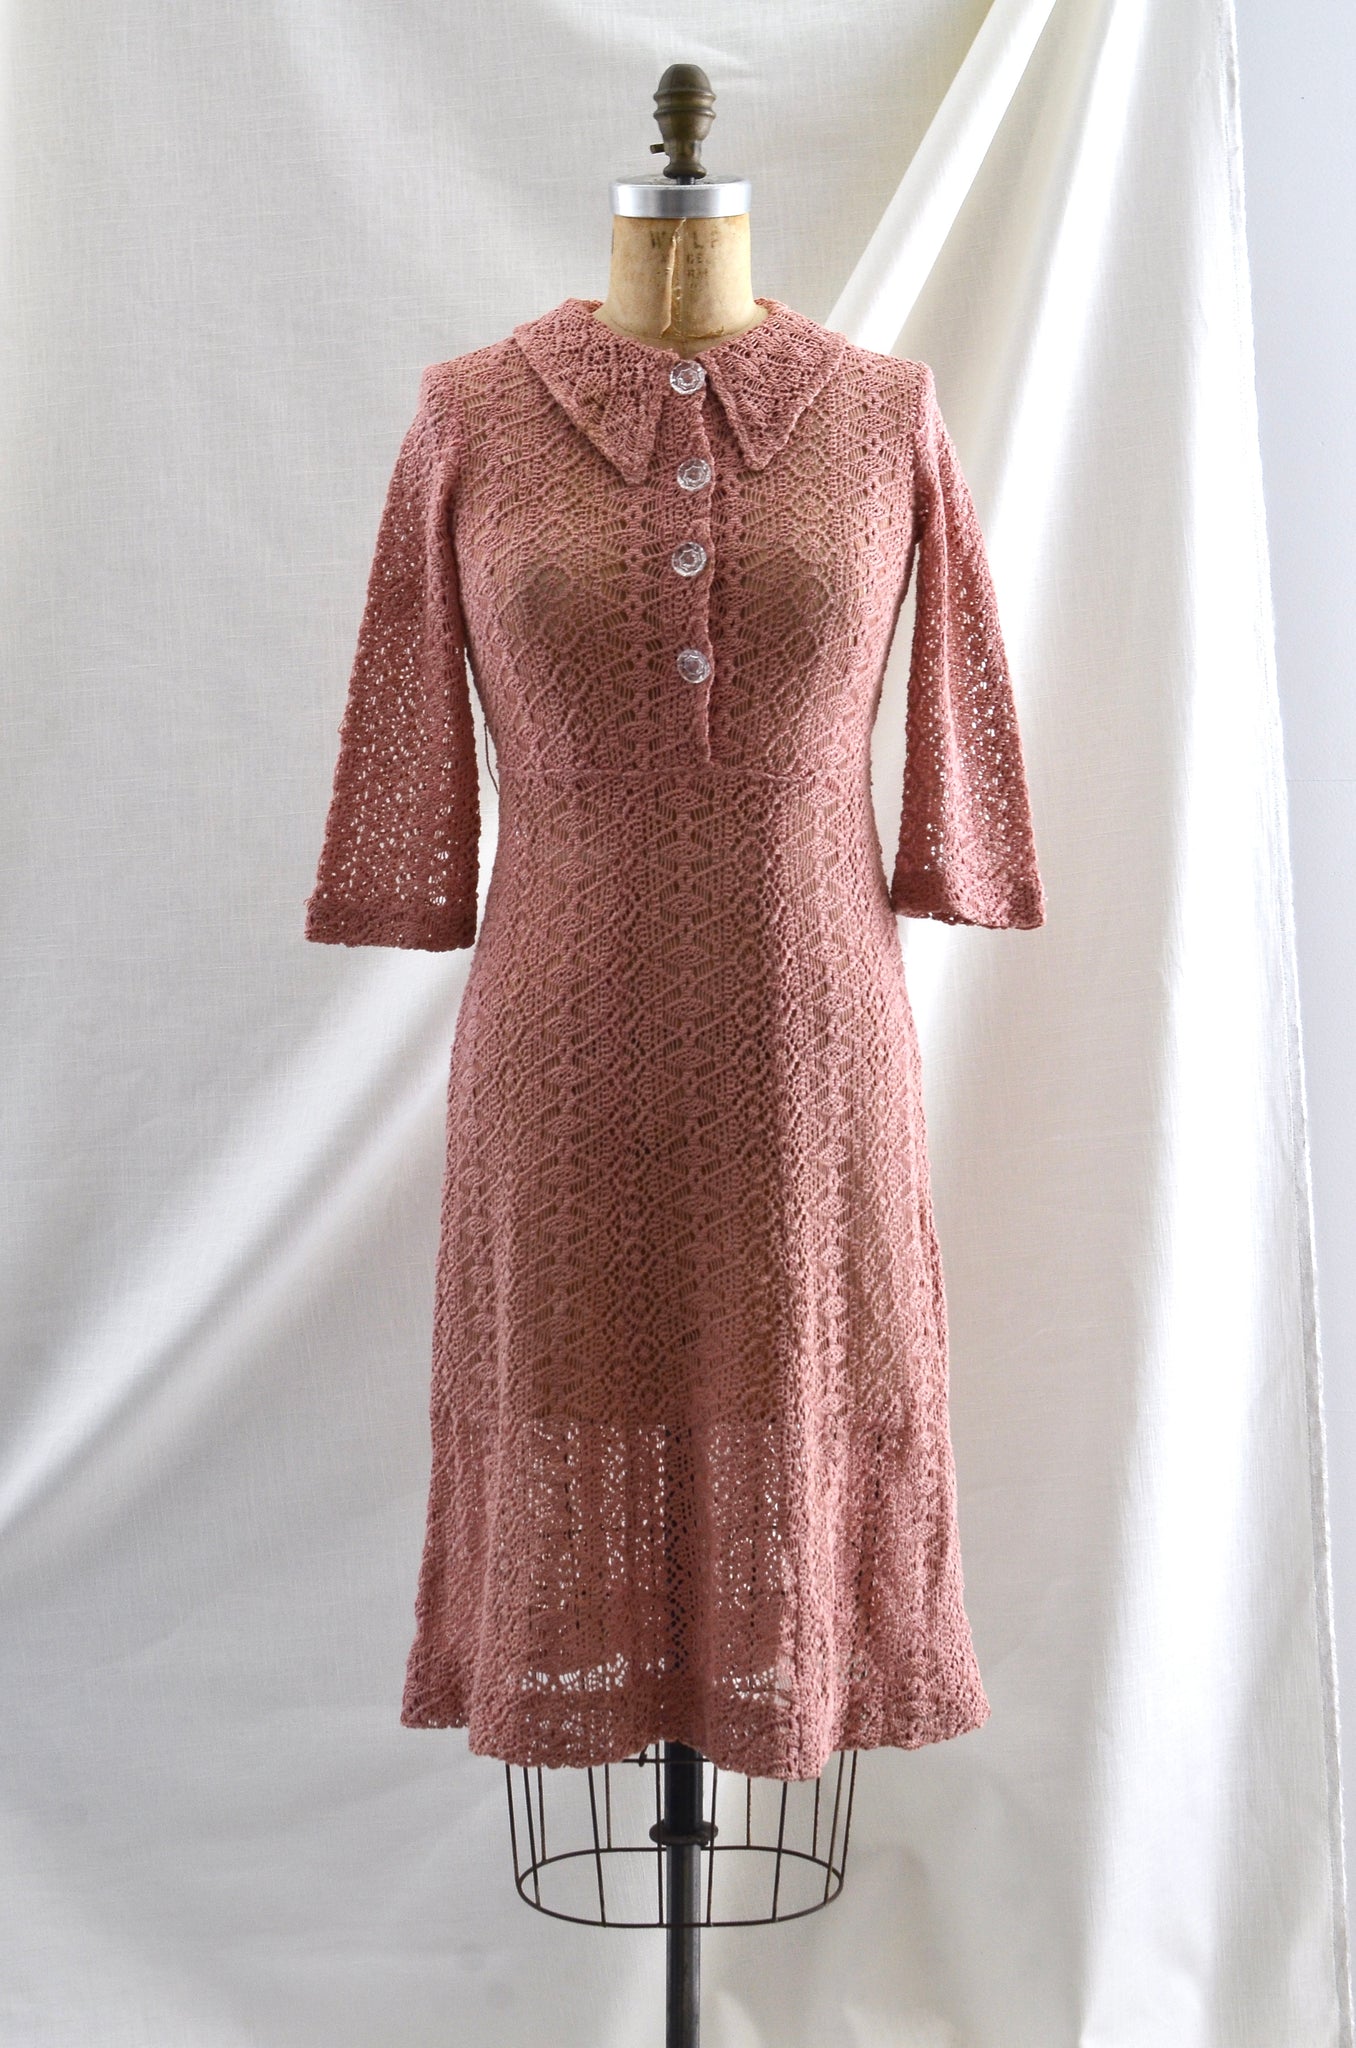 Vintage 1930's Dusty Rose Lace Dress